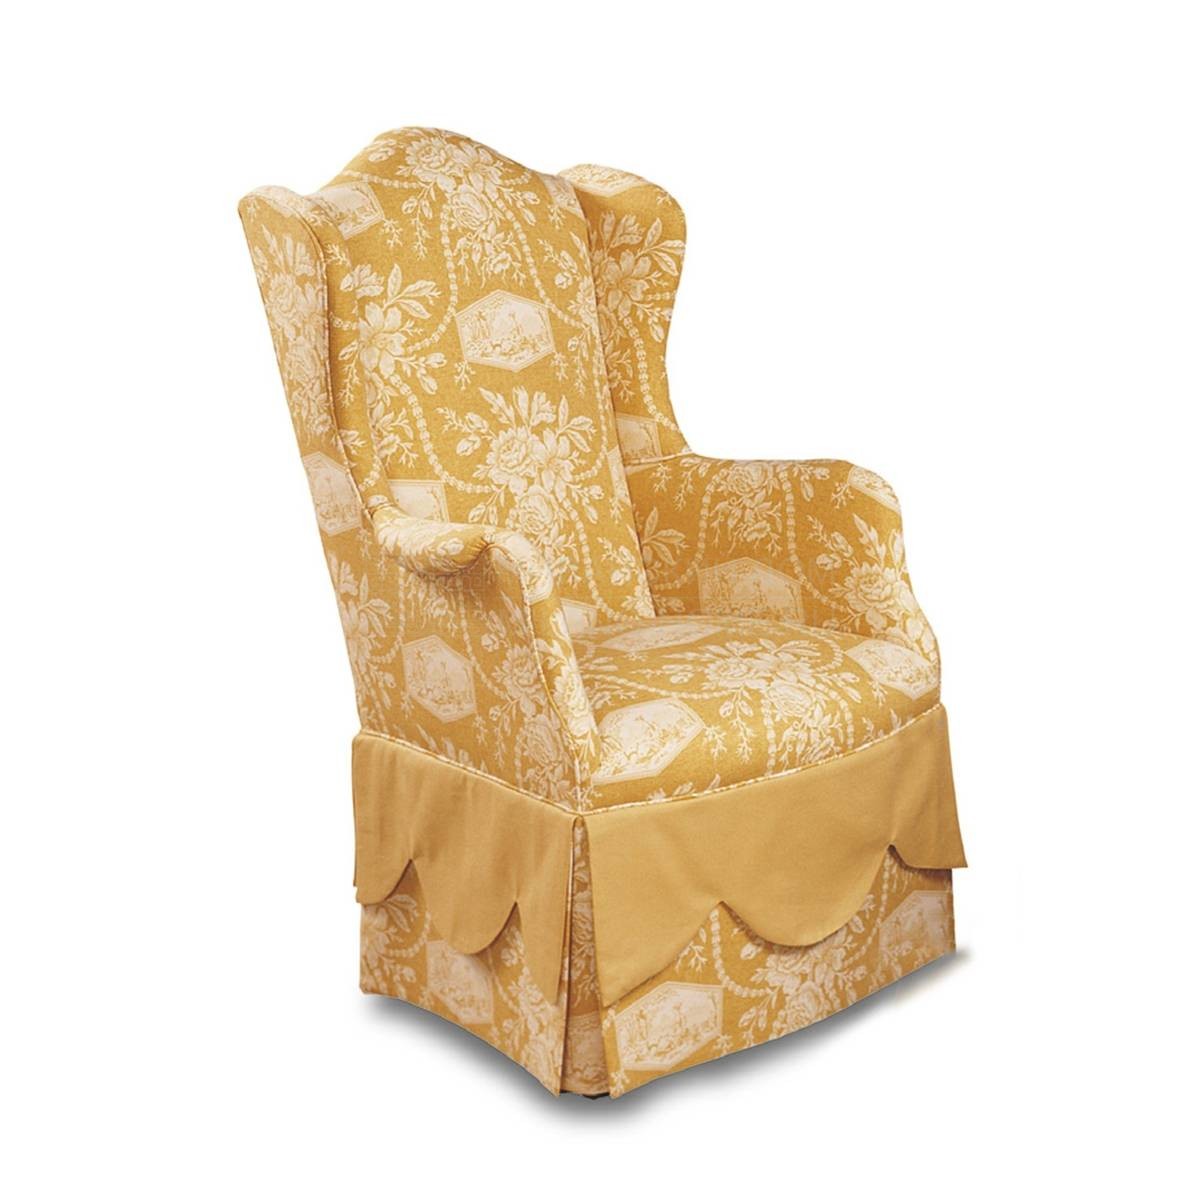 Кресло The Upholstery/P389 из Италии фабрики FRANCESCO MOLON